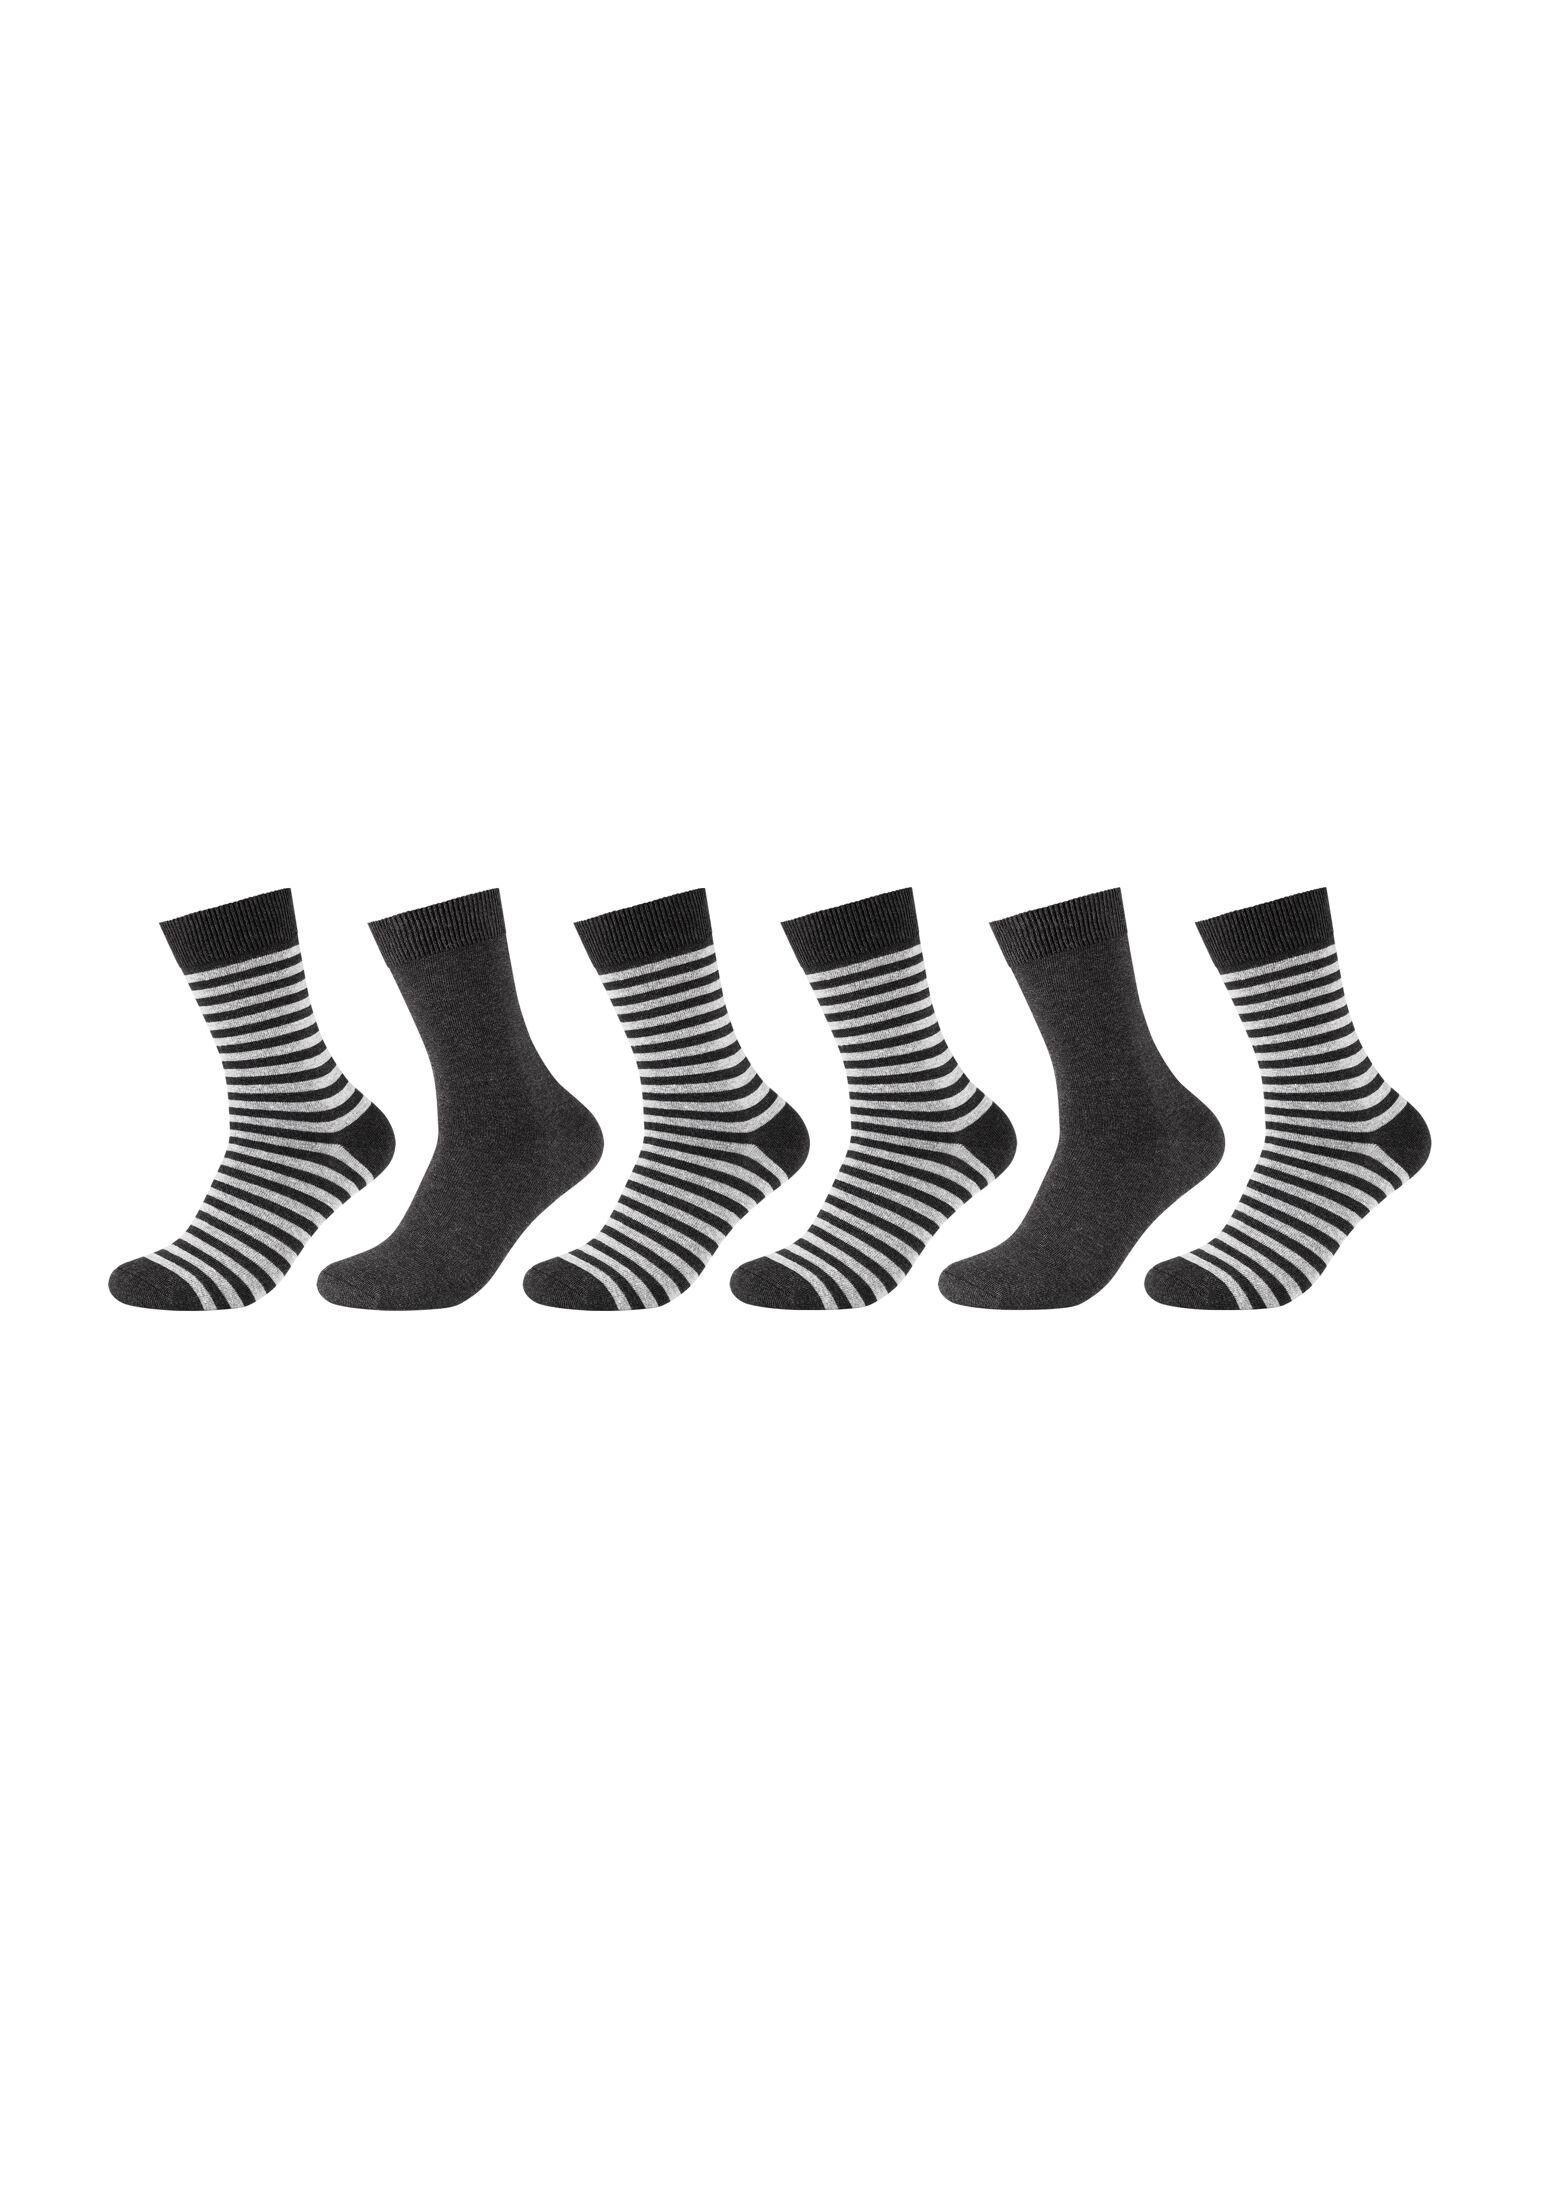 Camano Socken Belastungszonen 6er Socken Pack, Strapazierfähig: verstärkte